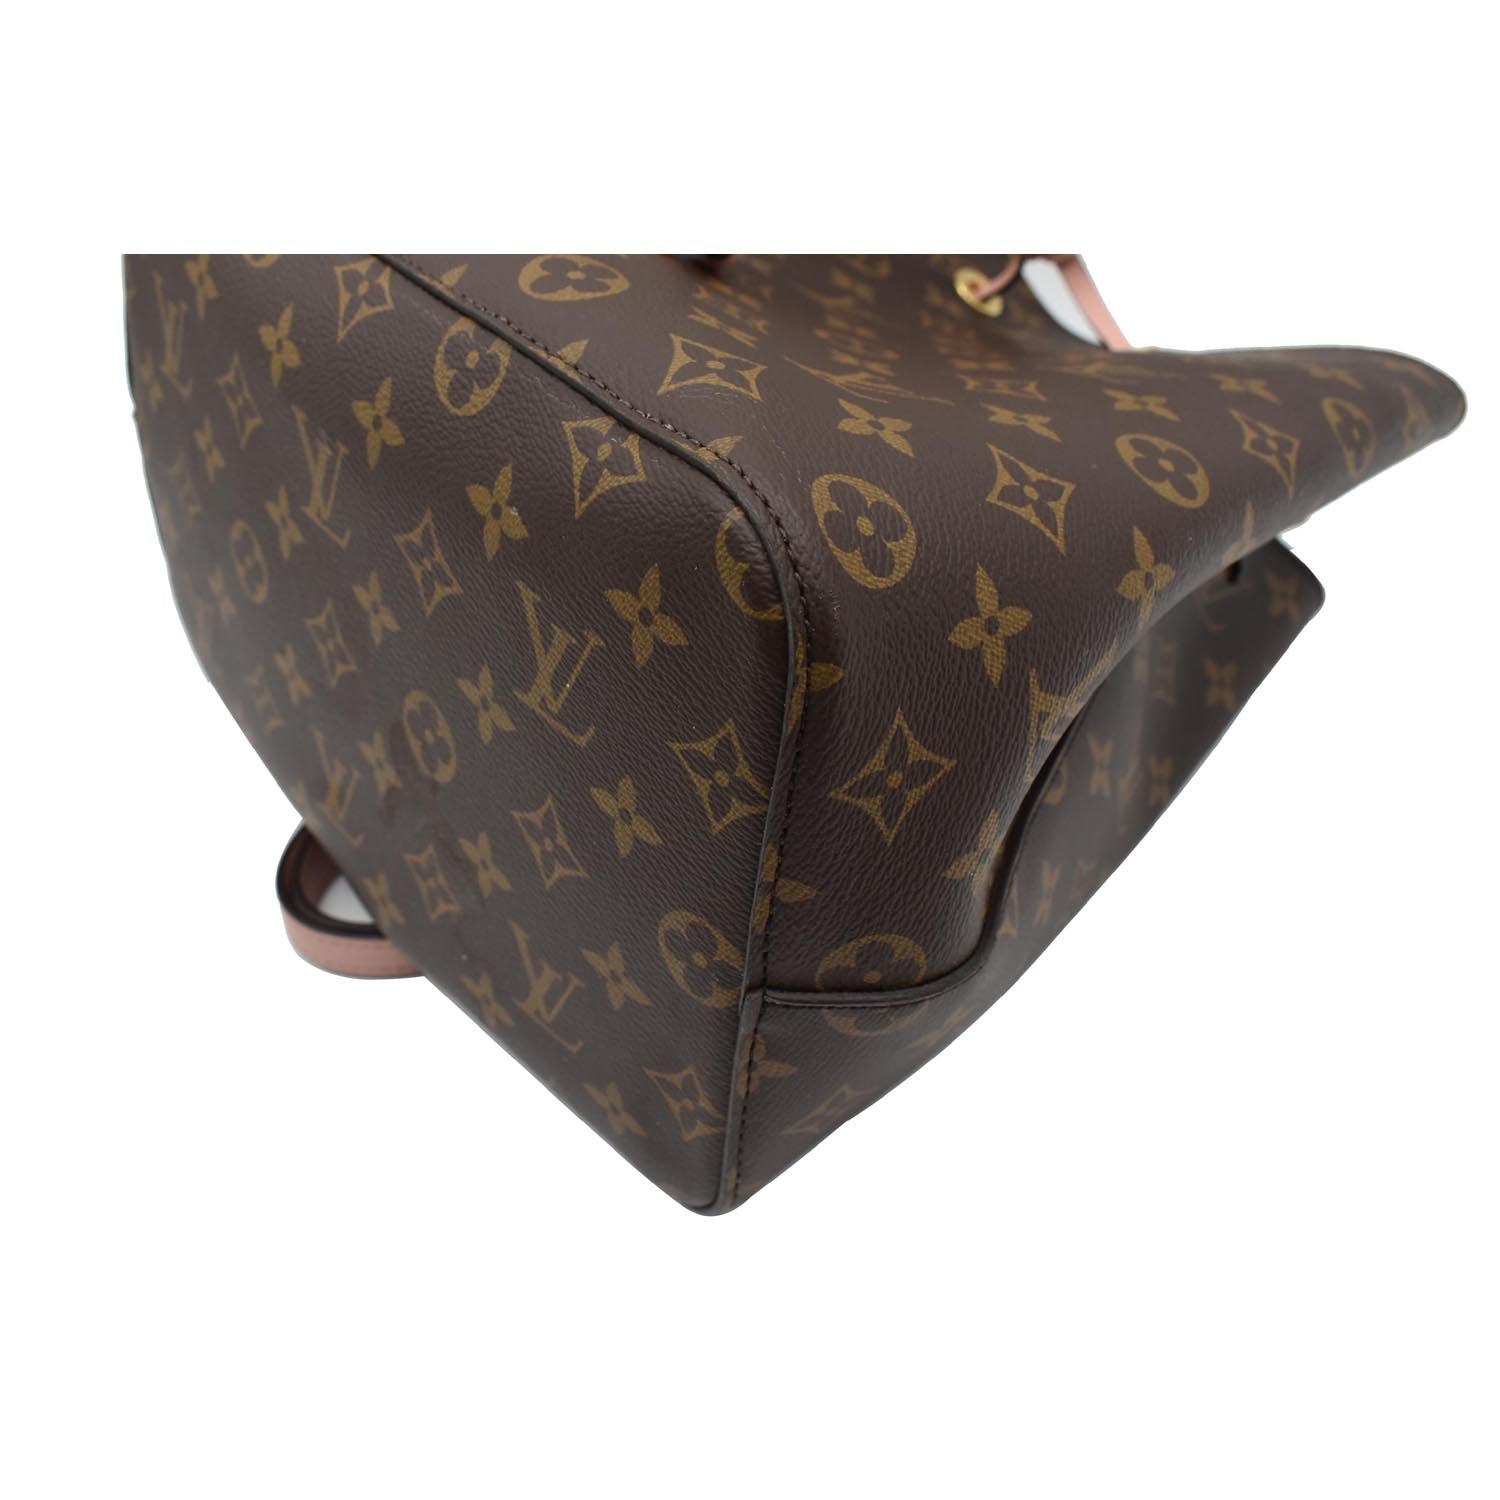 Preloved Louis Vuitton NeoNoe MM Monogram Canvas Shoulder Bag NZ1148 0 –  KimmieBBags LLC